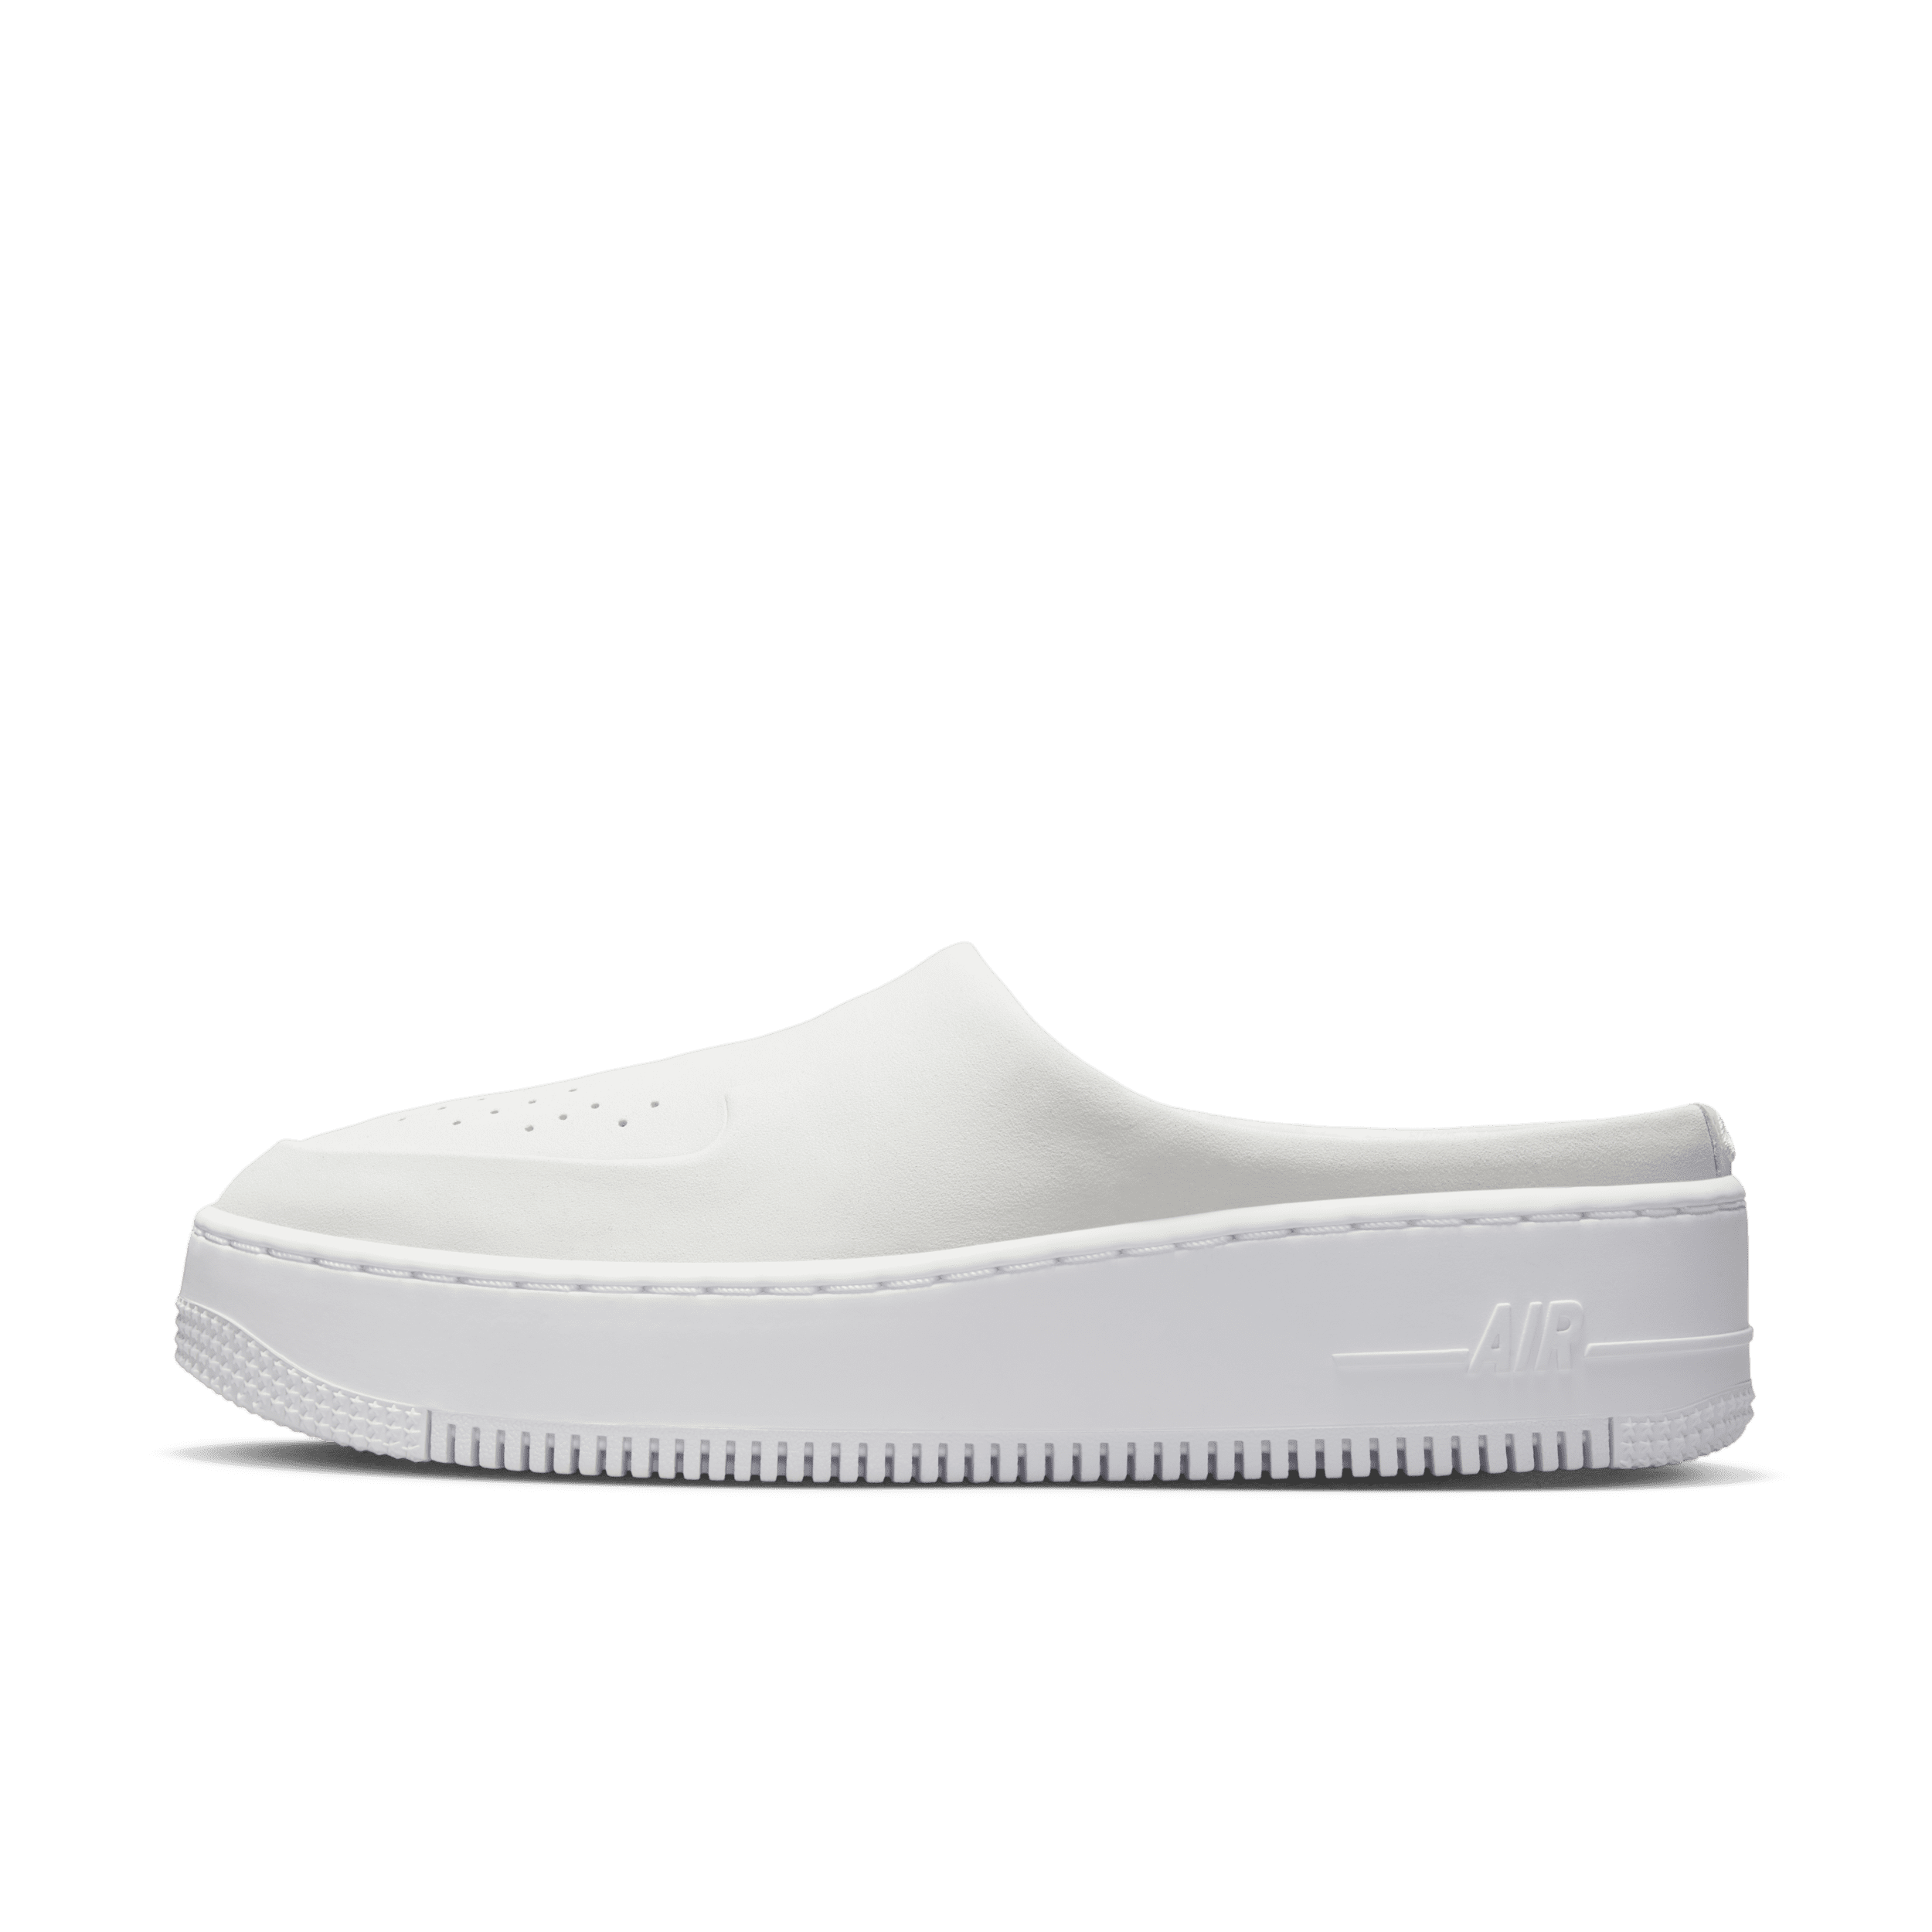 Chaussure Nike Air Force 1 Lover XX pour femme – Blanc